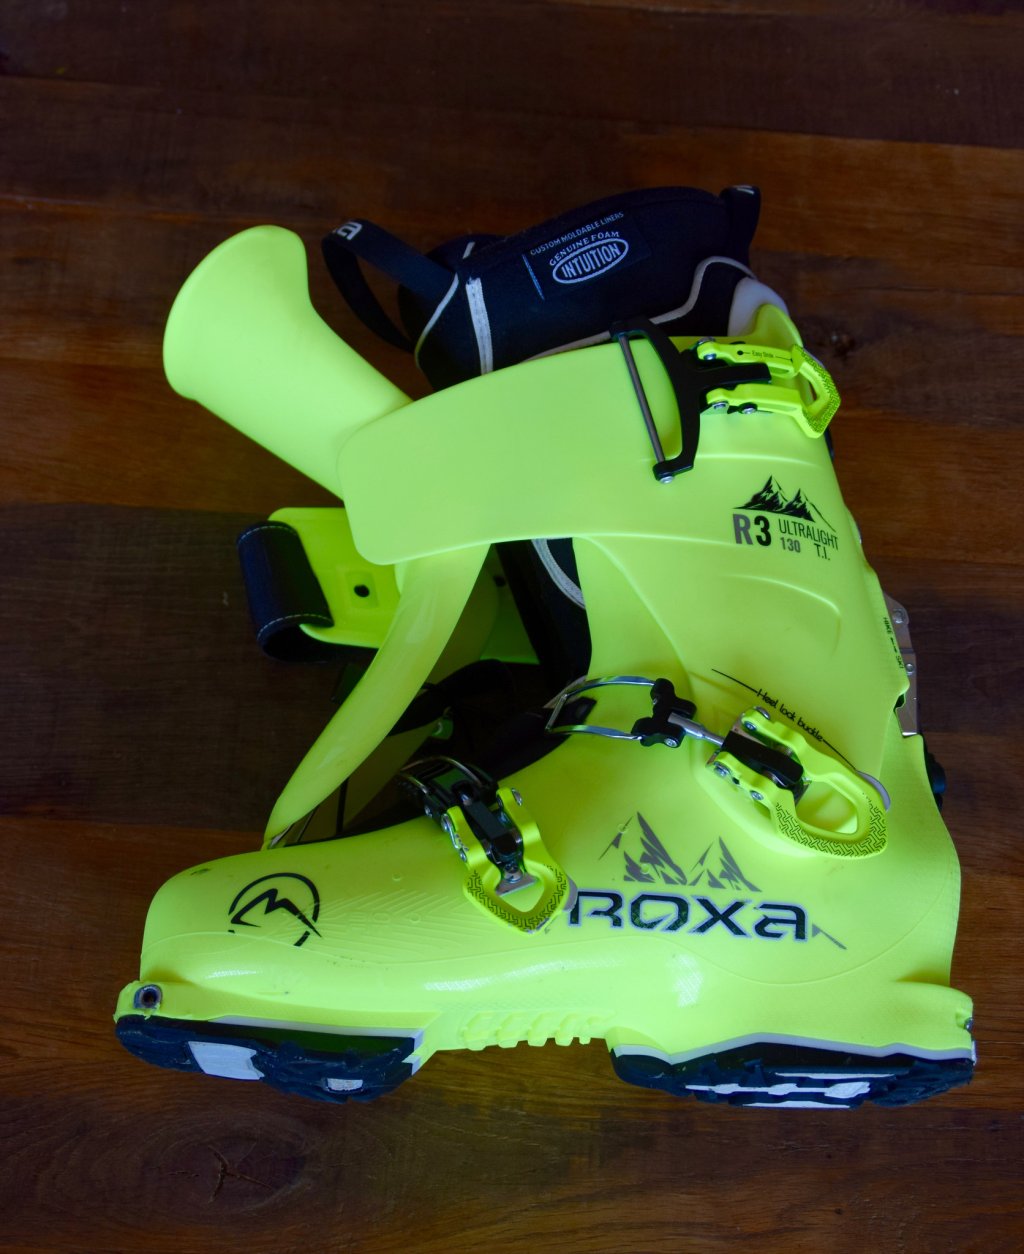 Roxa R3 130 TI I.R.
https://www.roxa.com/de/ski-stiefel/freeride/r3-130-ti-i-r/